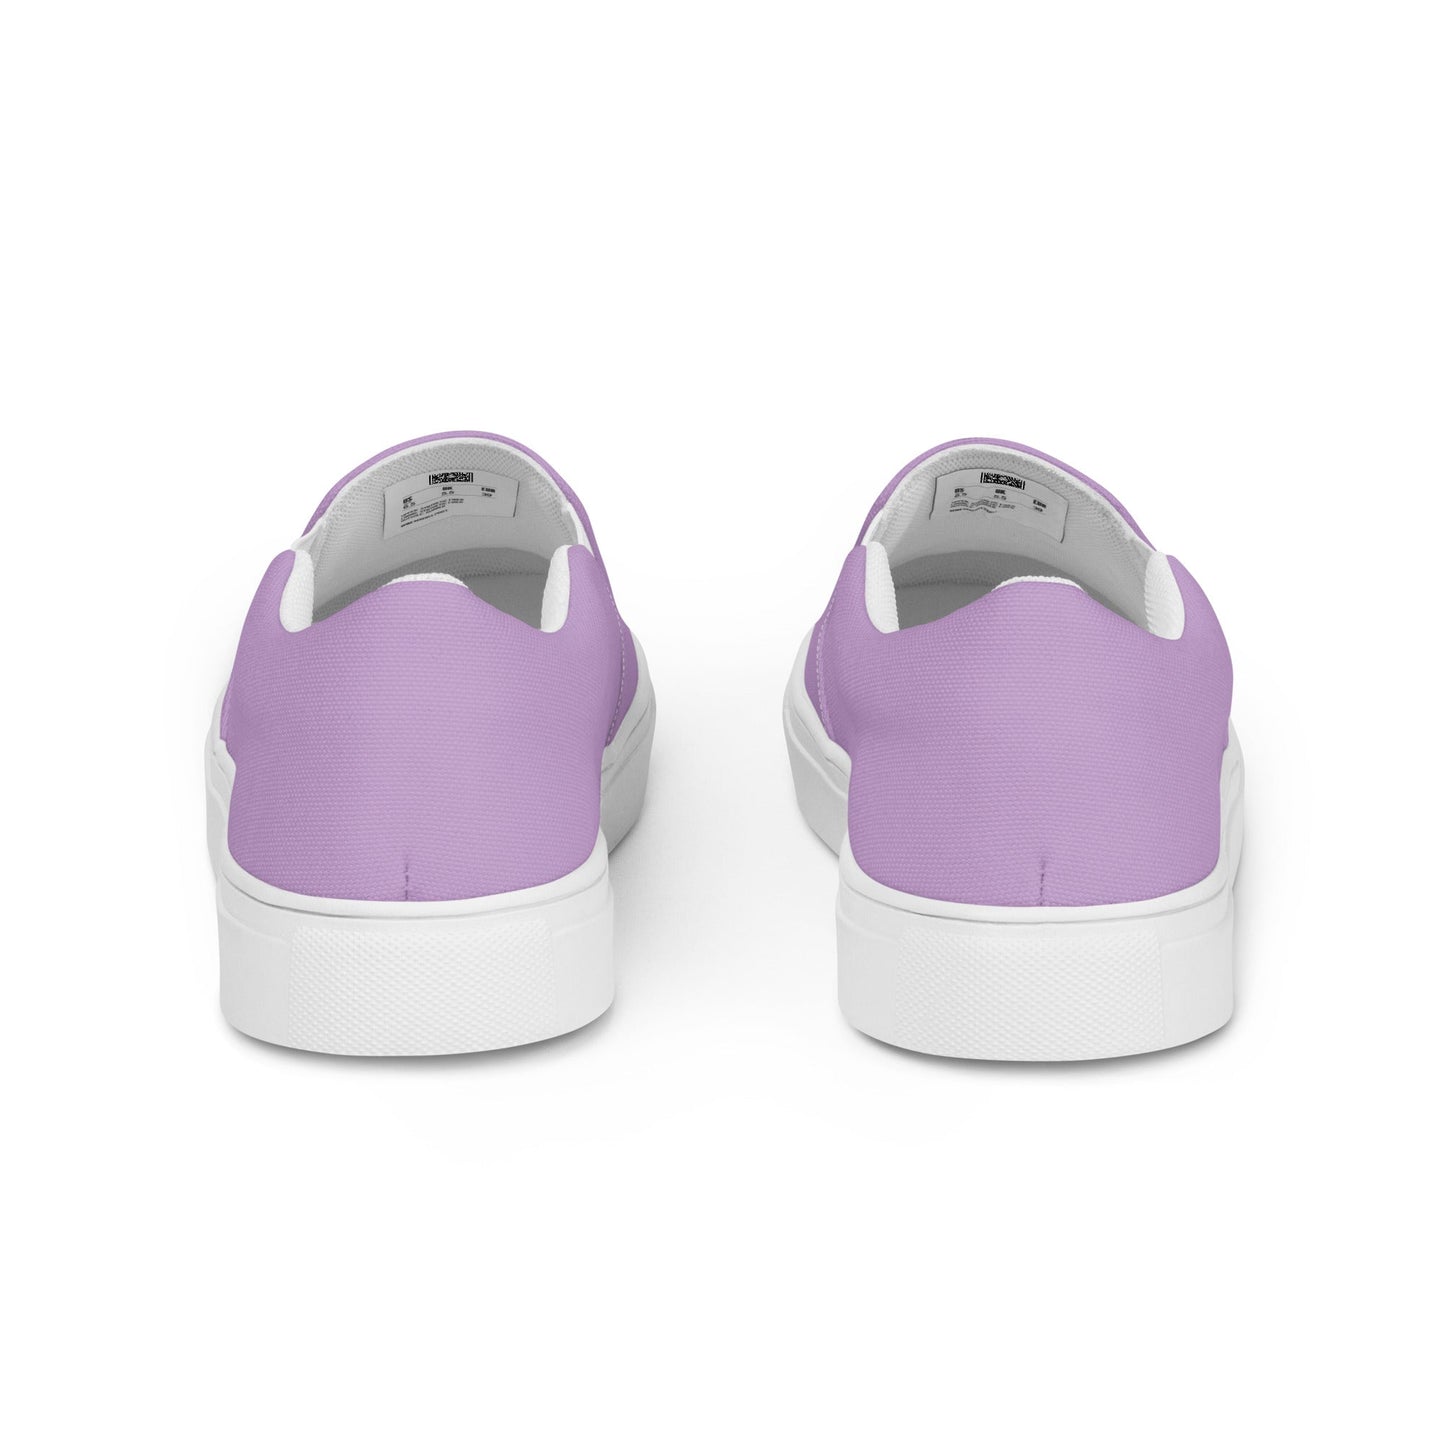 klasneakers Men’s slip-on canvas shoes - Pinky Purple